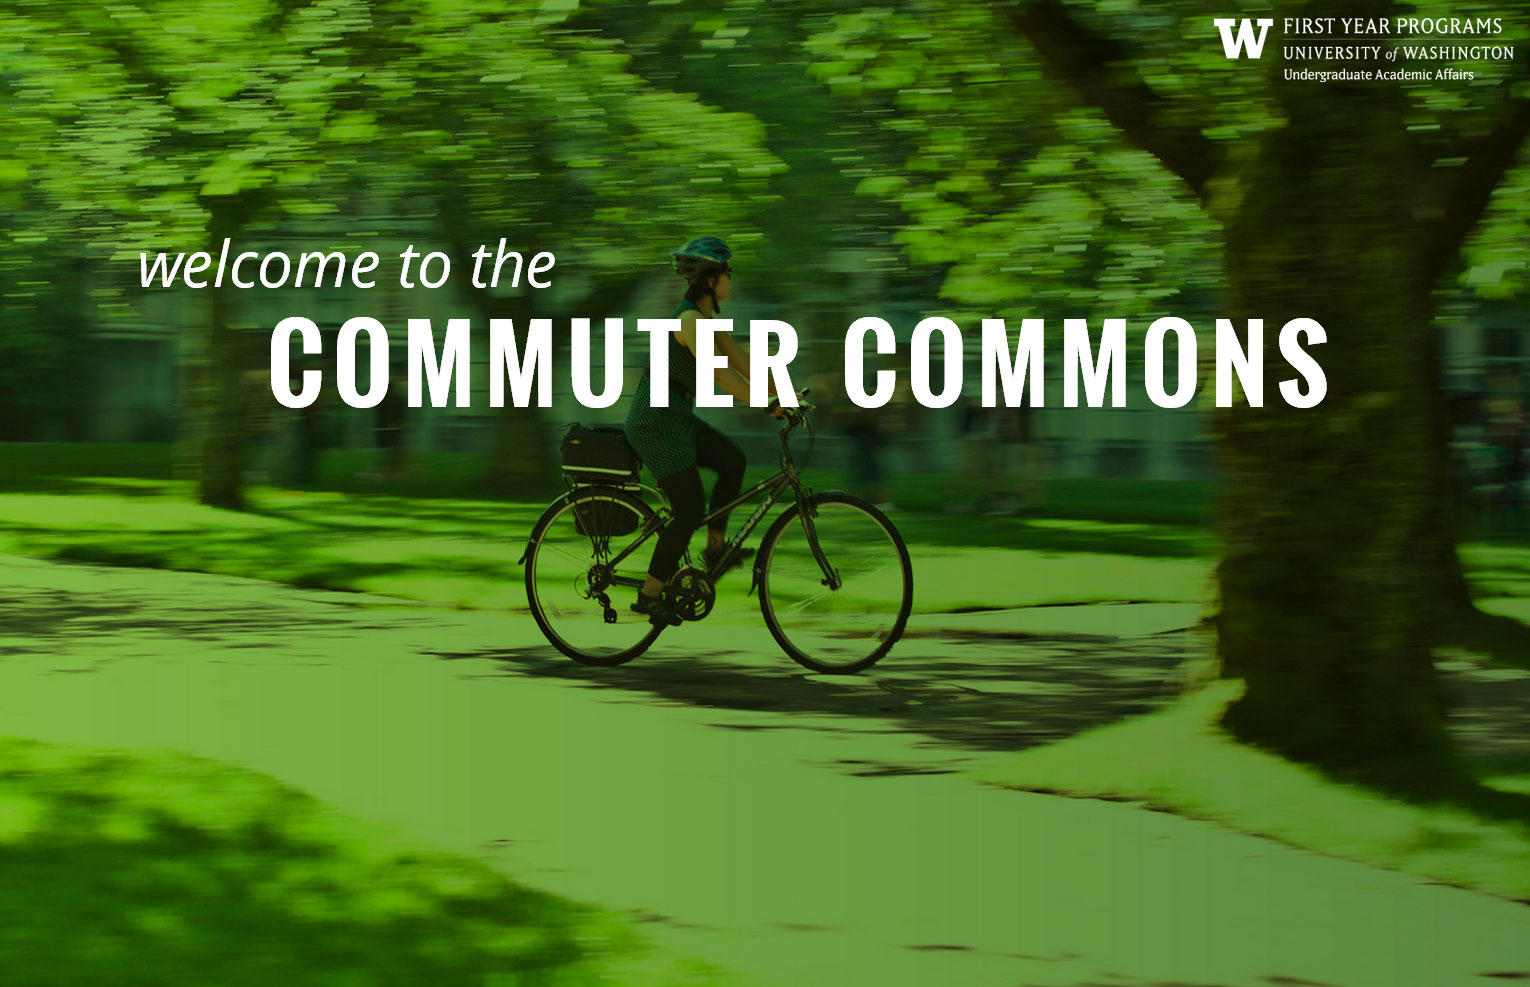 University of Washington Commuter Commons